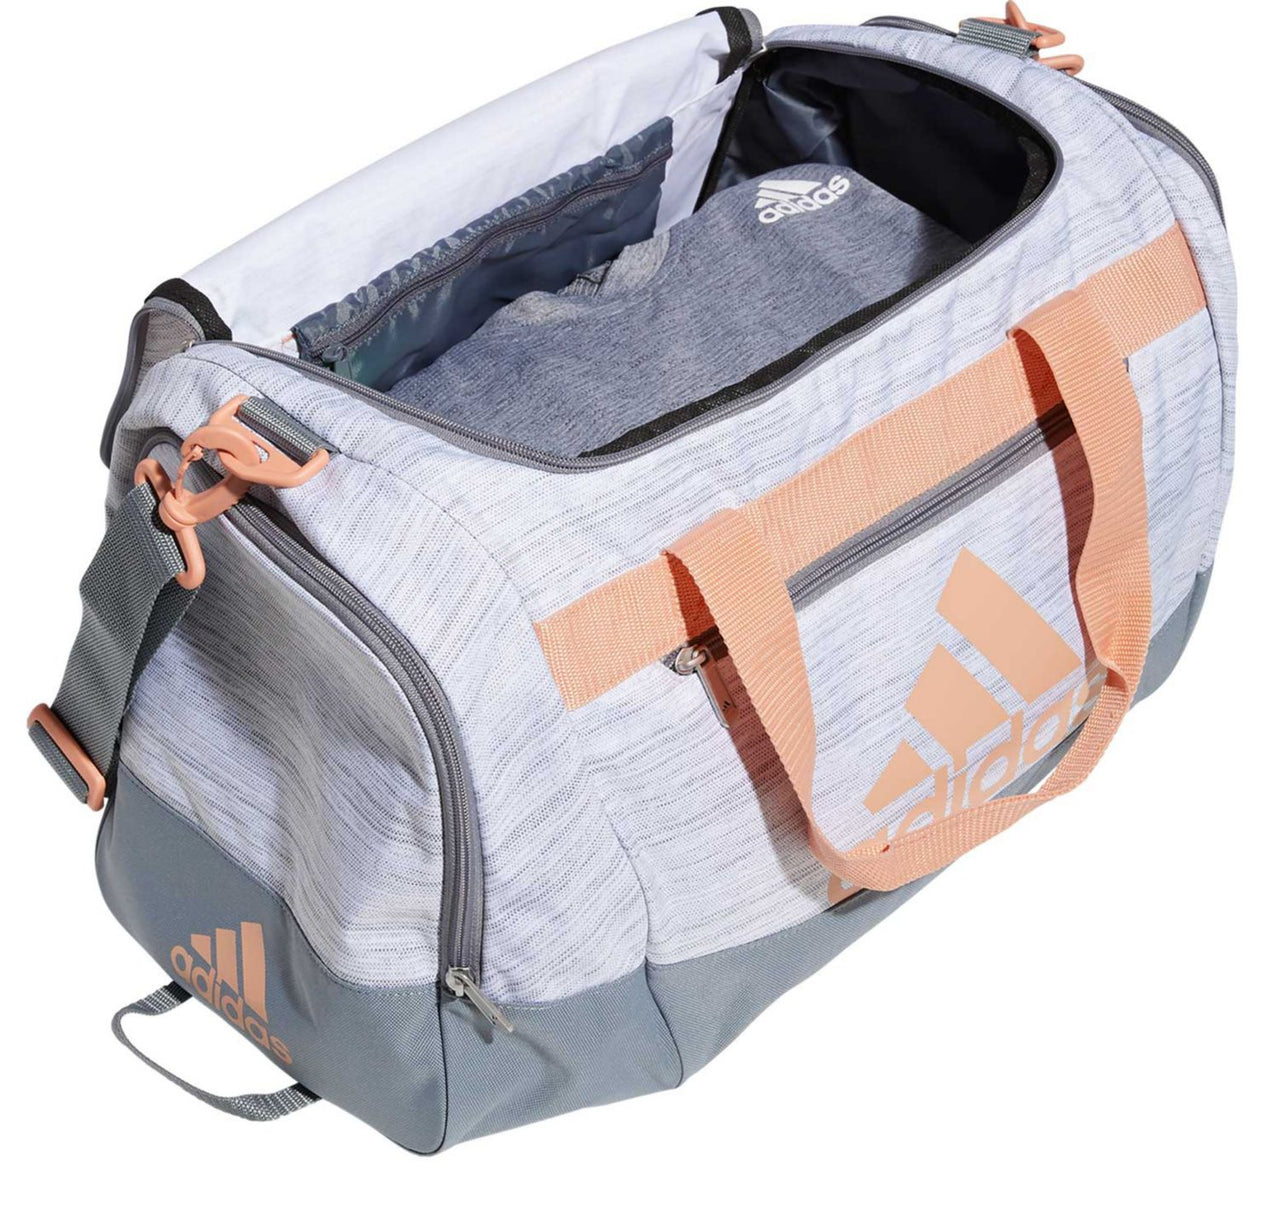 Adidas Defender VI Small Duffel Bag